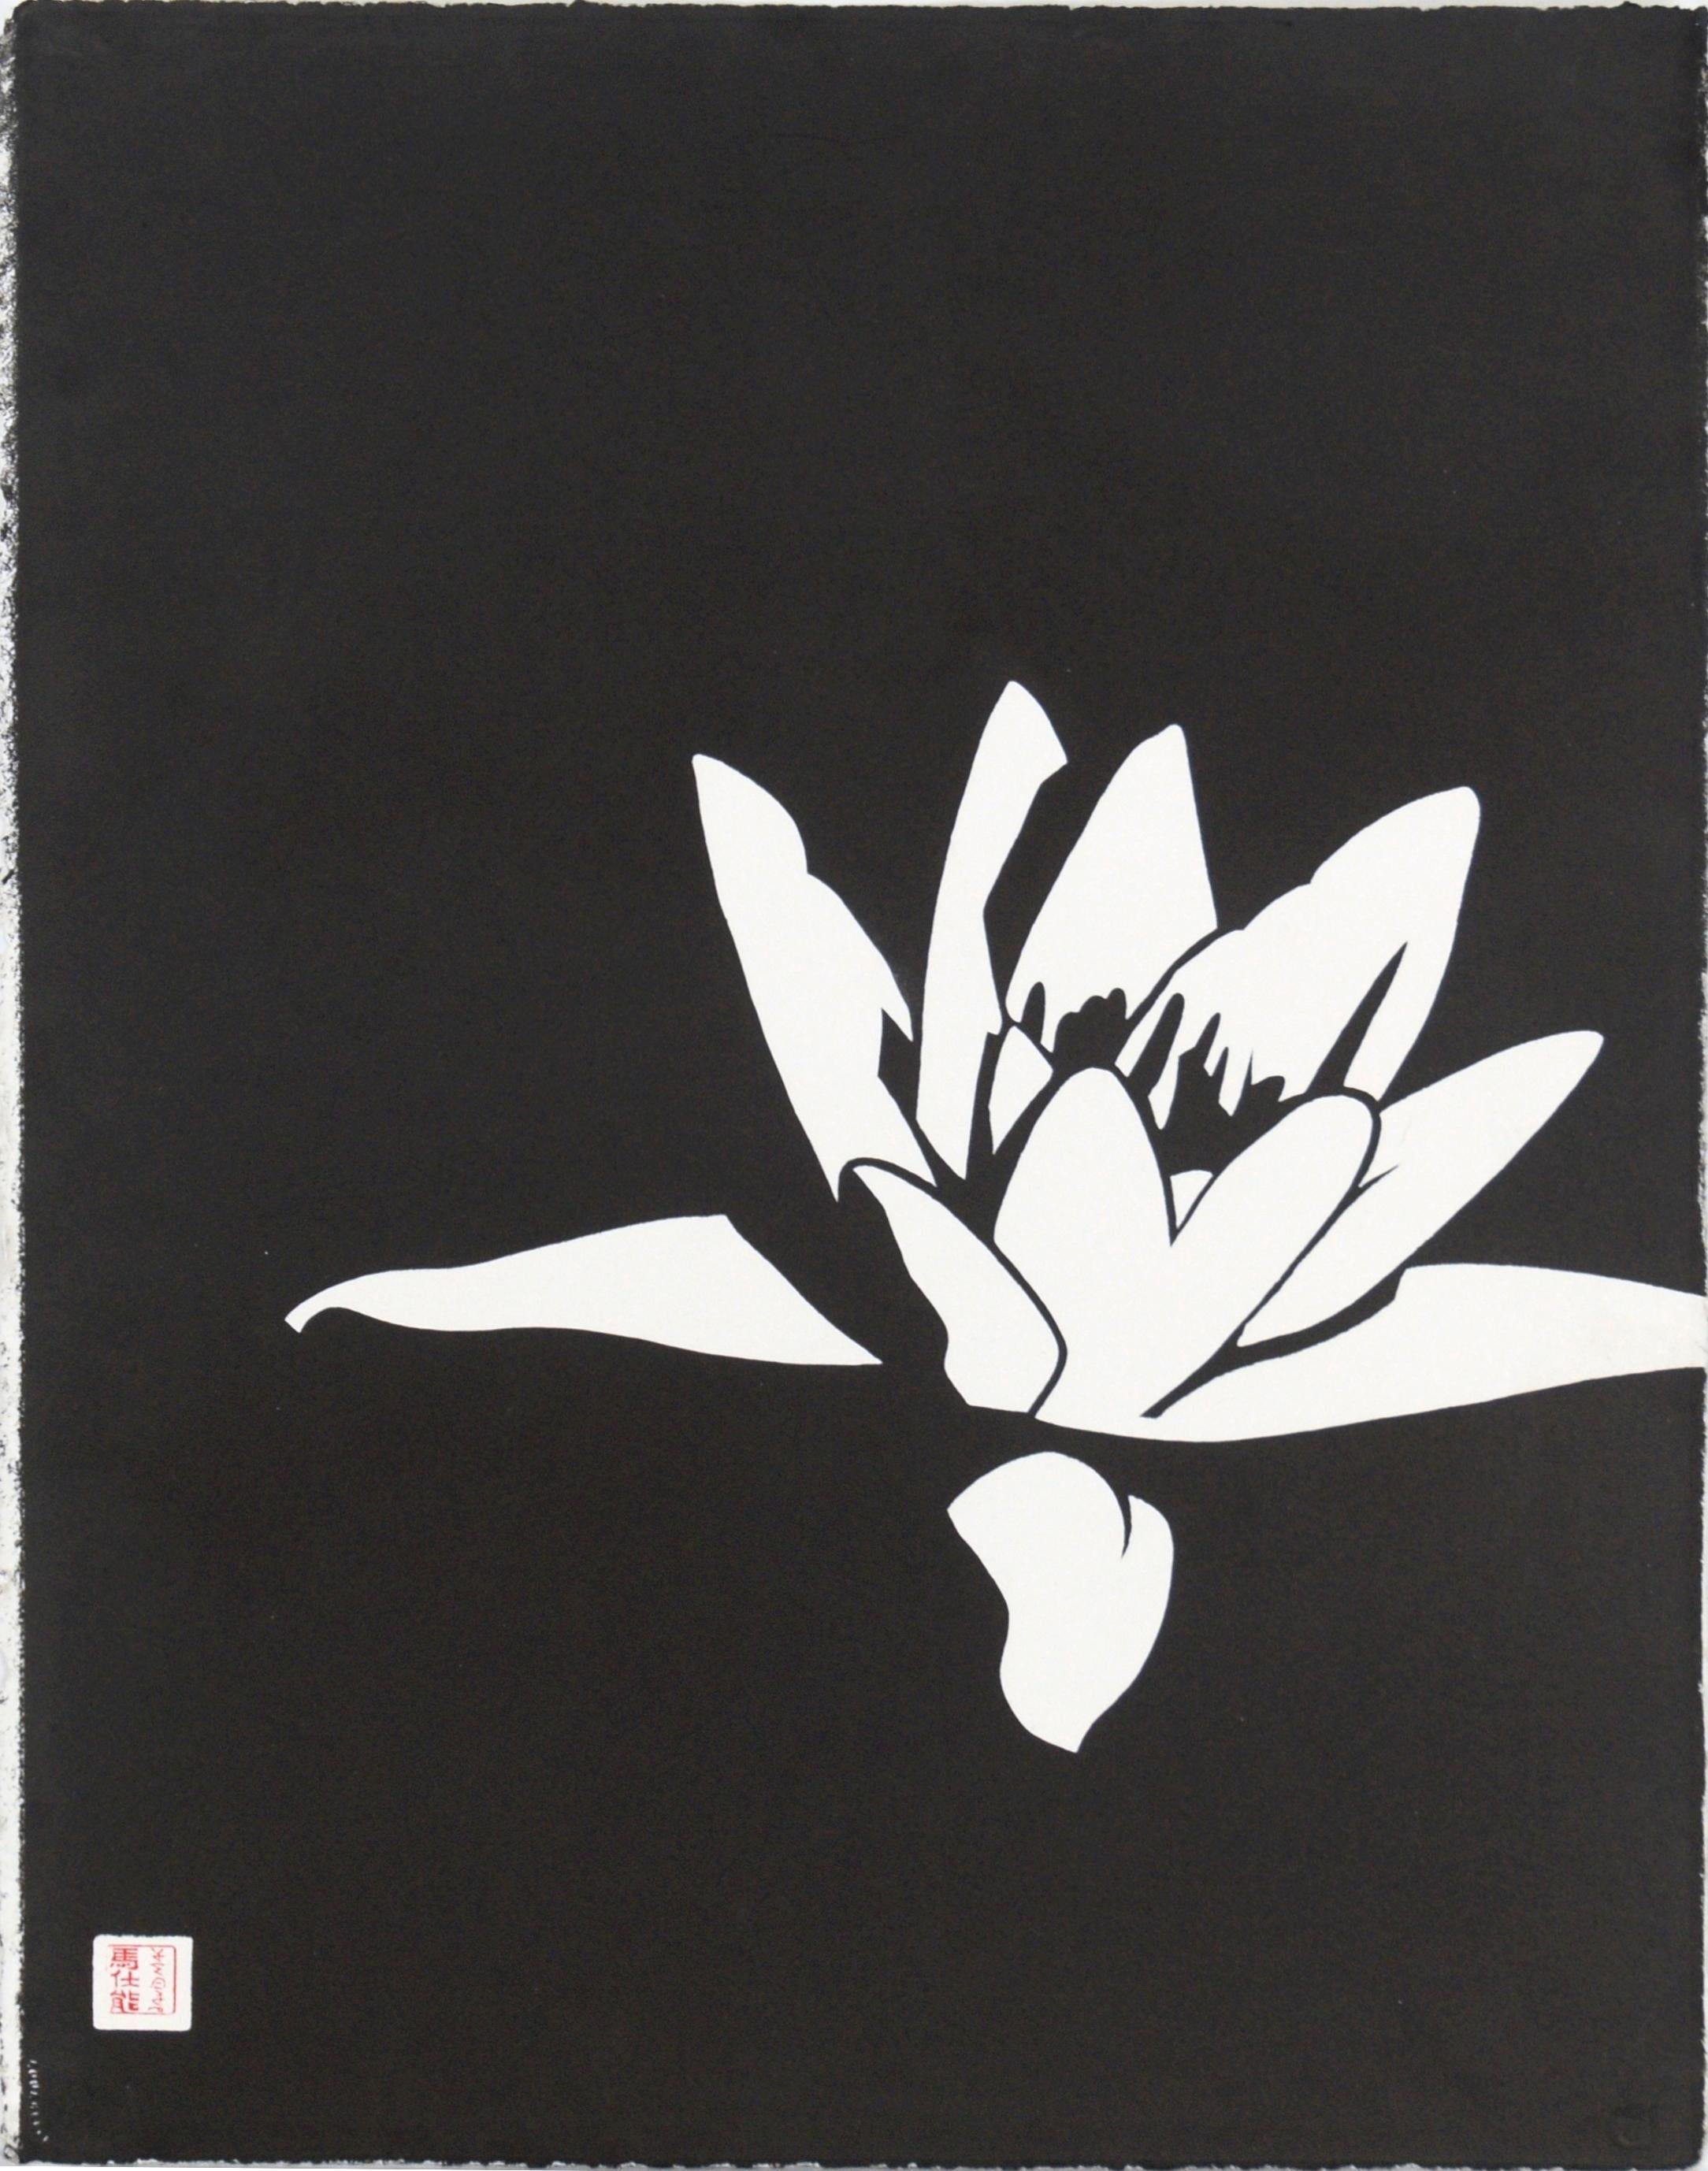 David Mar Abstract Print - White Lily - Minimalist Pop Art Screenprint